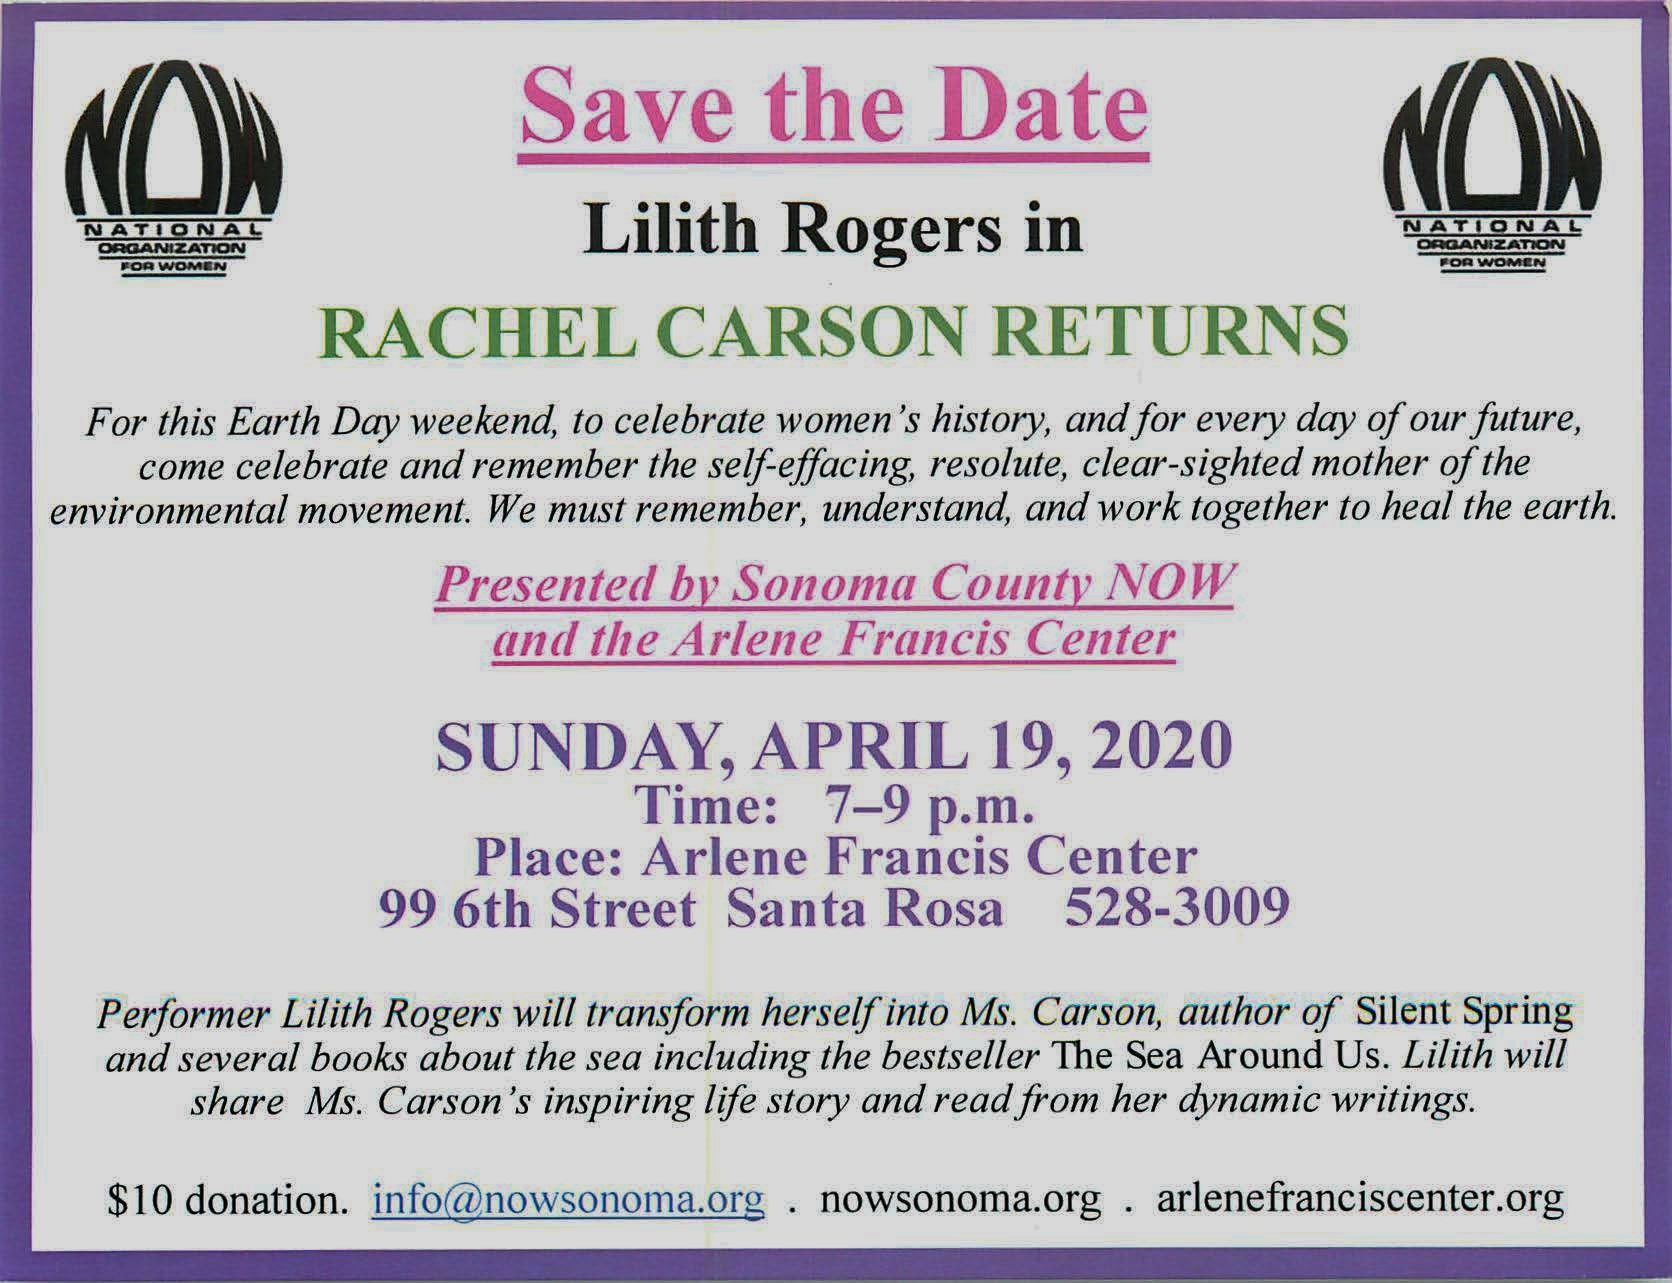 Rachel Carson Returns starring Lilith Rogers